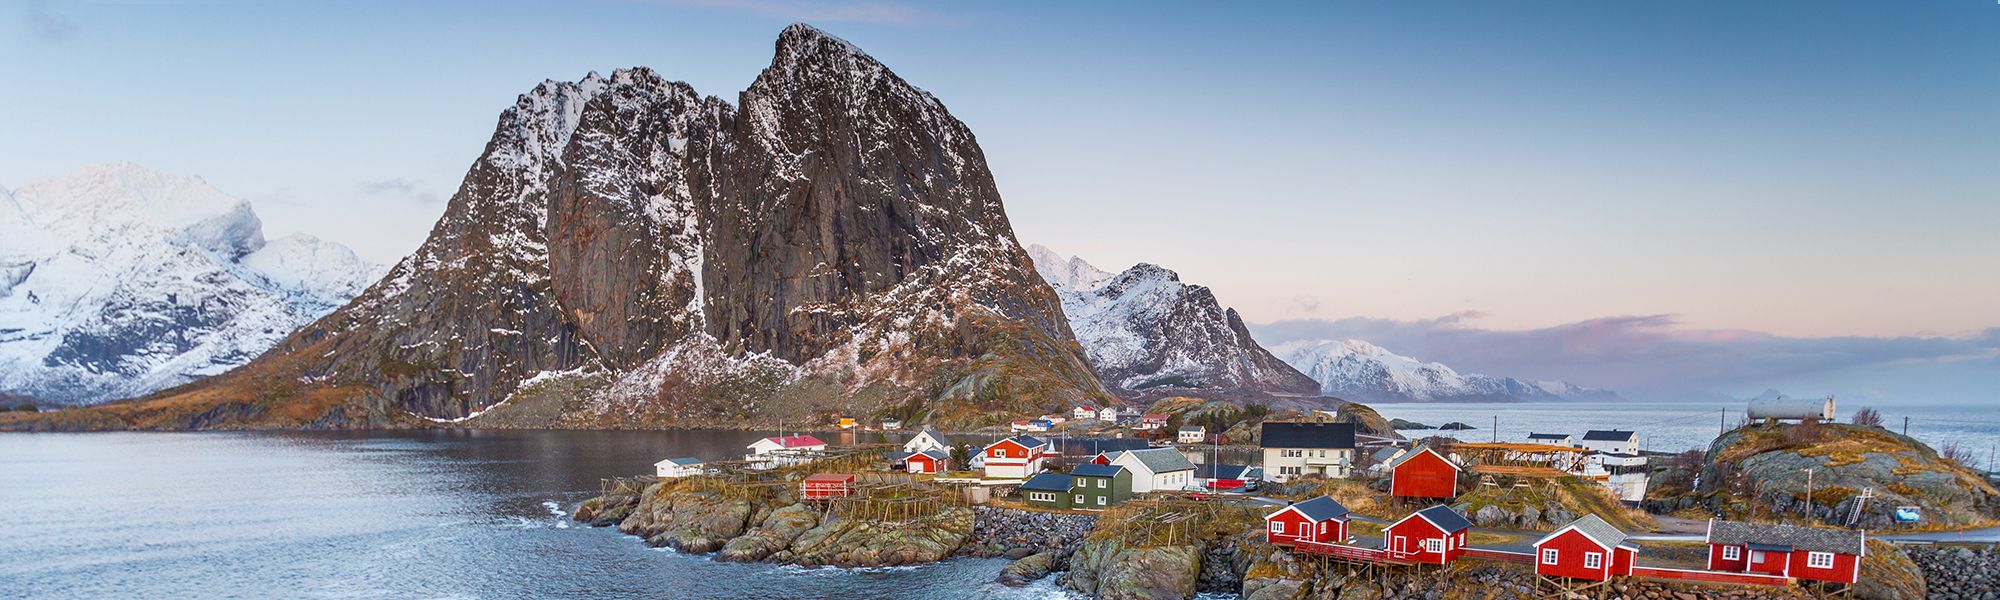 Voyage en famille Norvège © Alex Cornu - Visit Norway